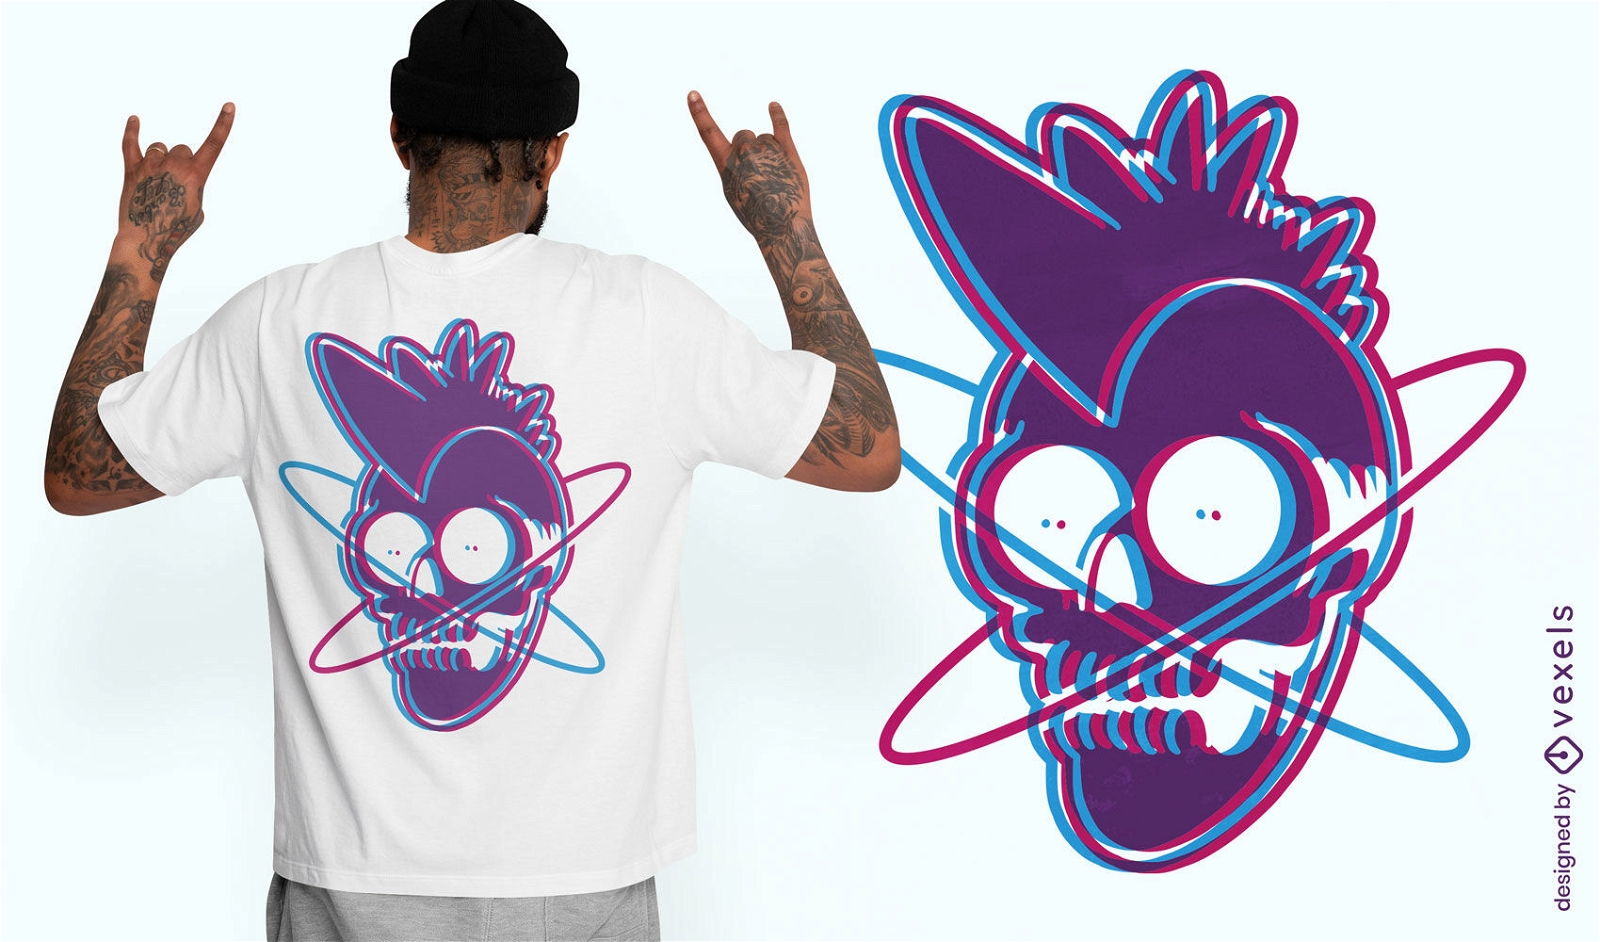 Distorted punk sull t-shirt design